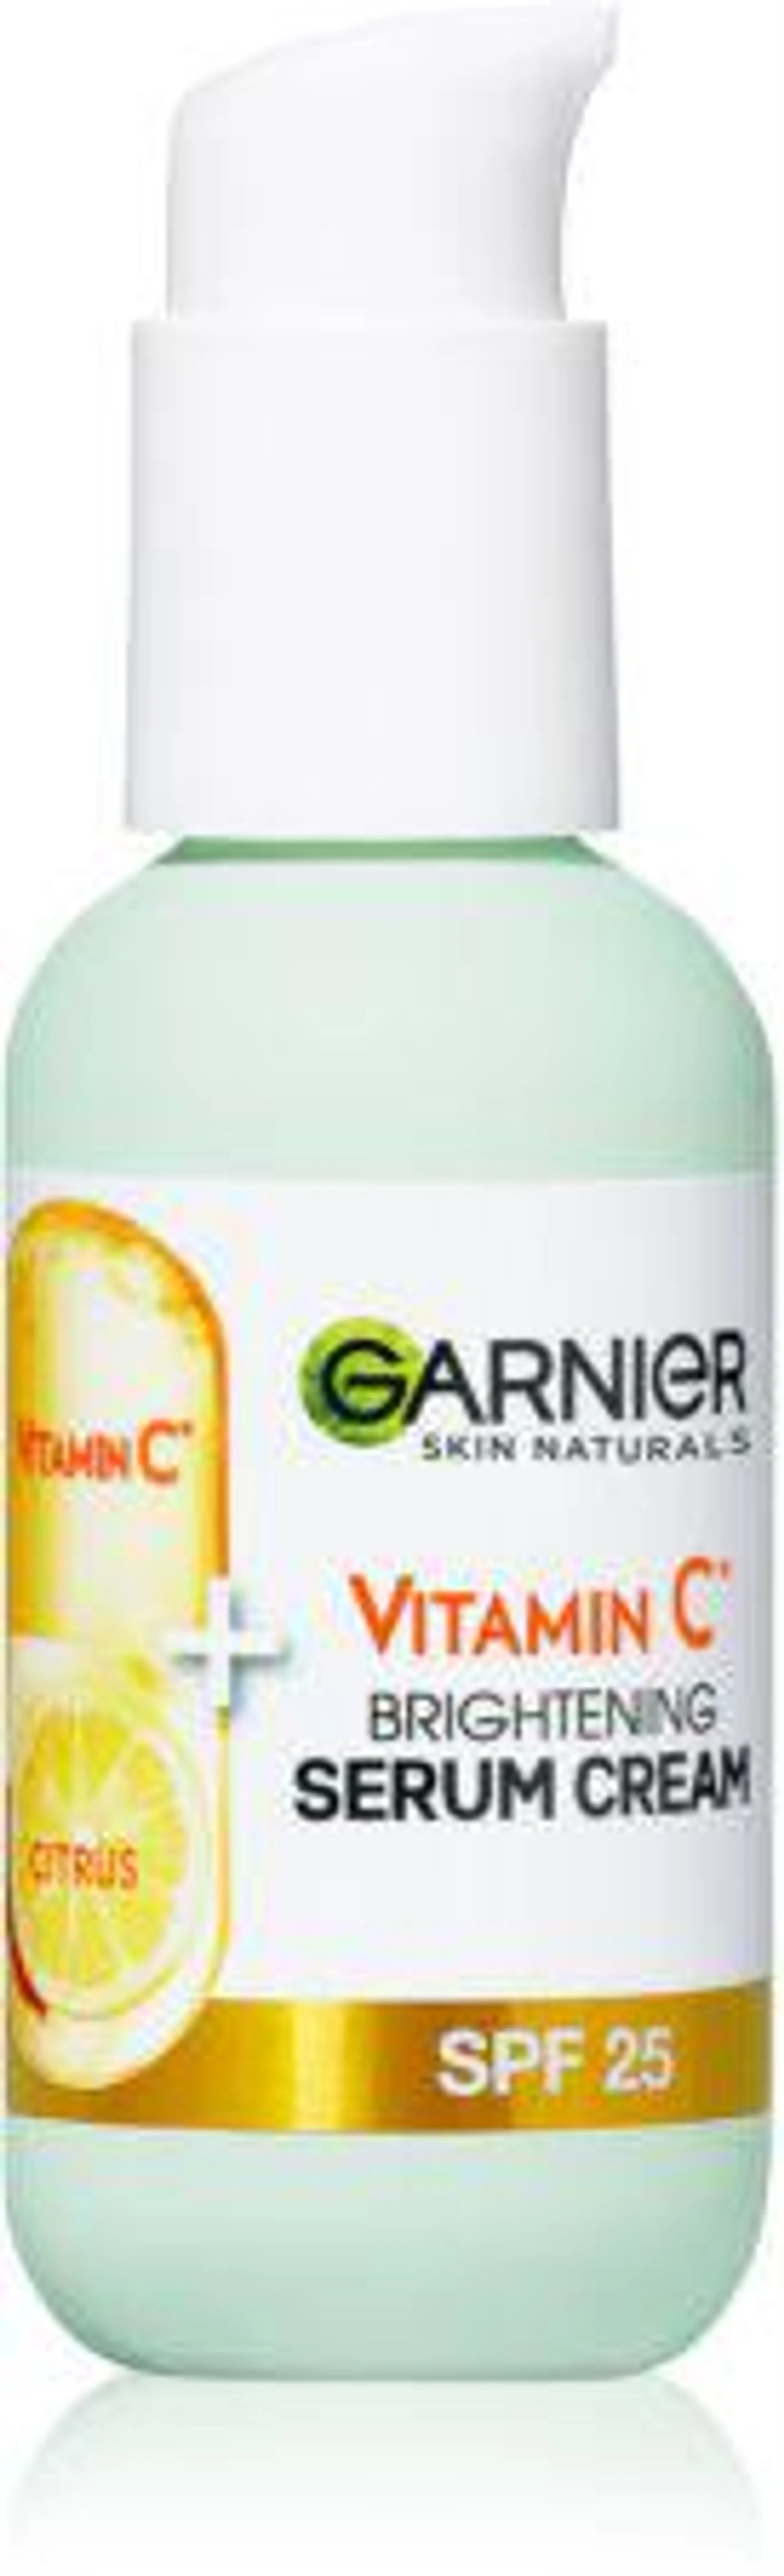 Skin Naturals Vitamin C